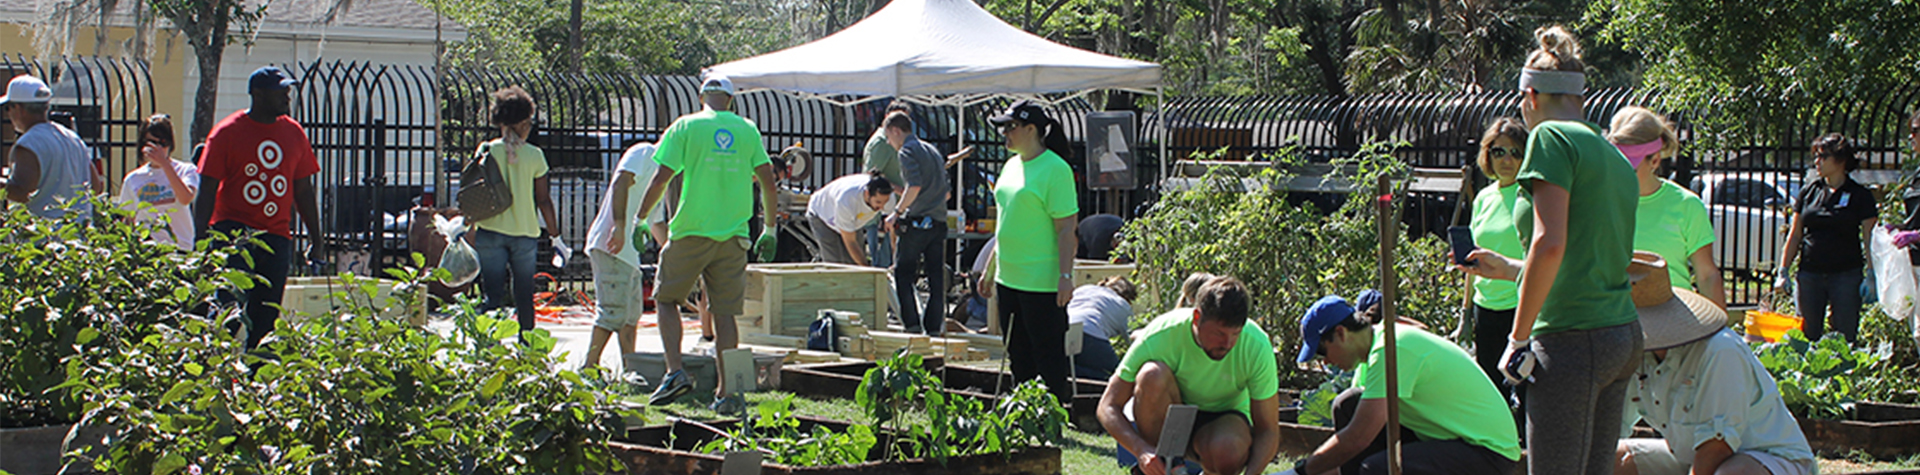 Volunteers working in the community garden at Harvest Hope Park in Tampa, Florida